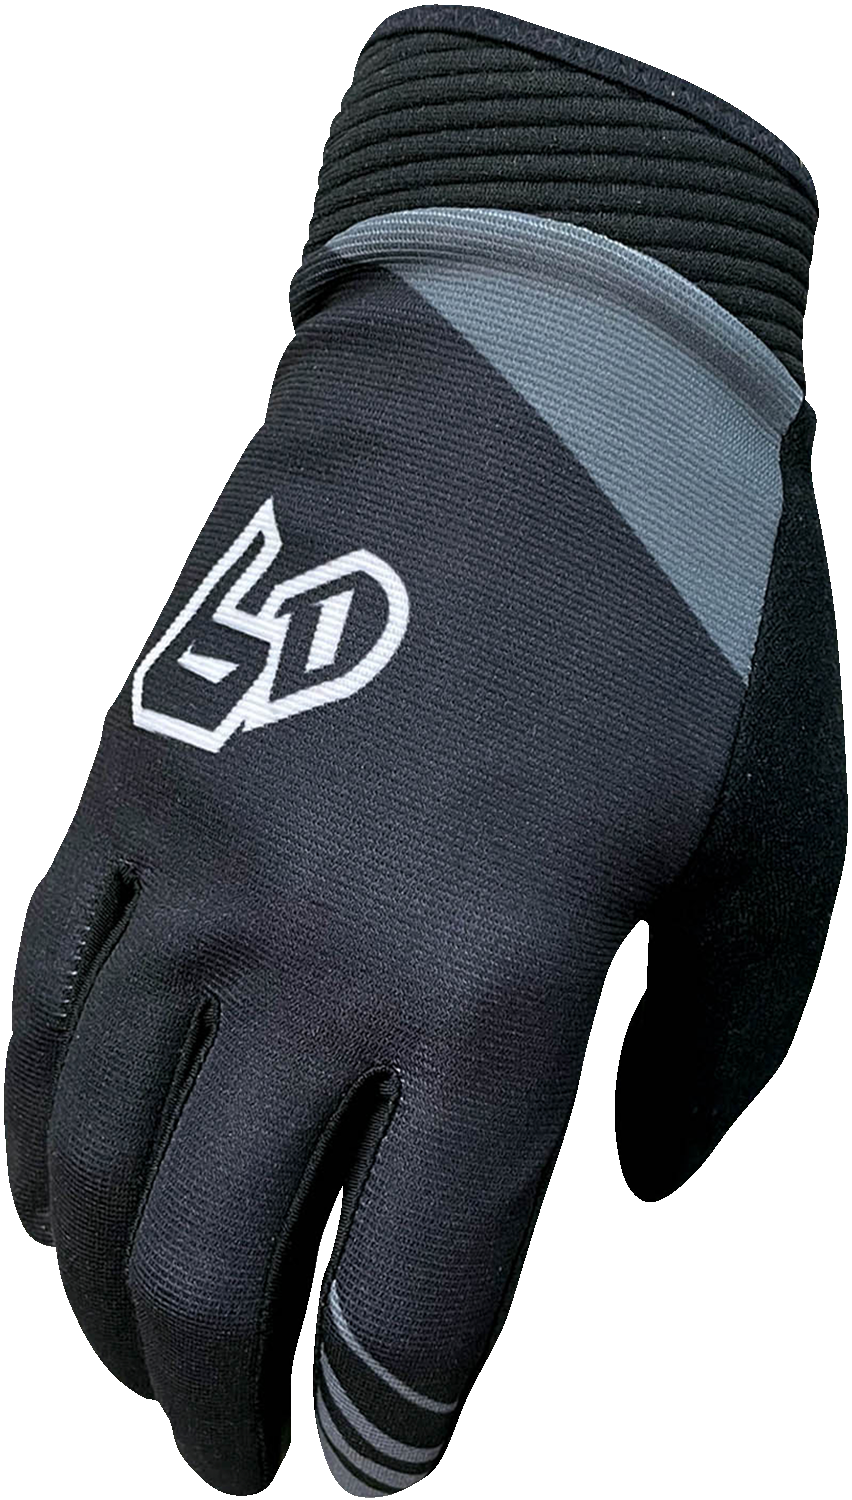 6D MTB Gloves - Black - Large 52-4007